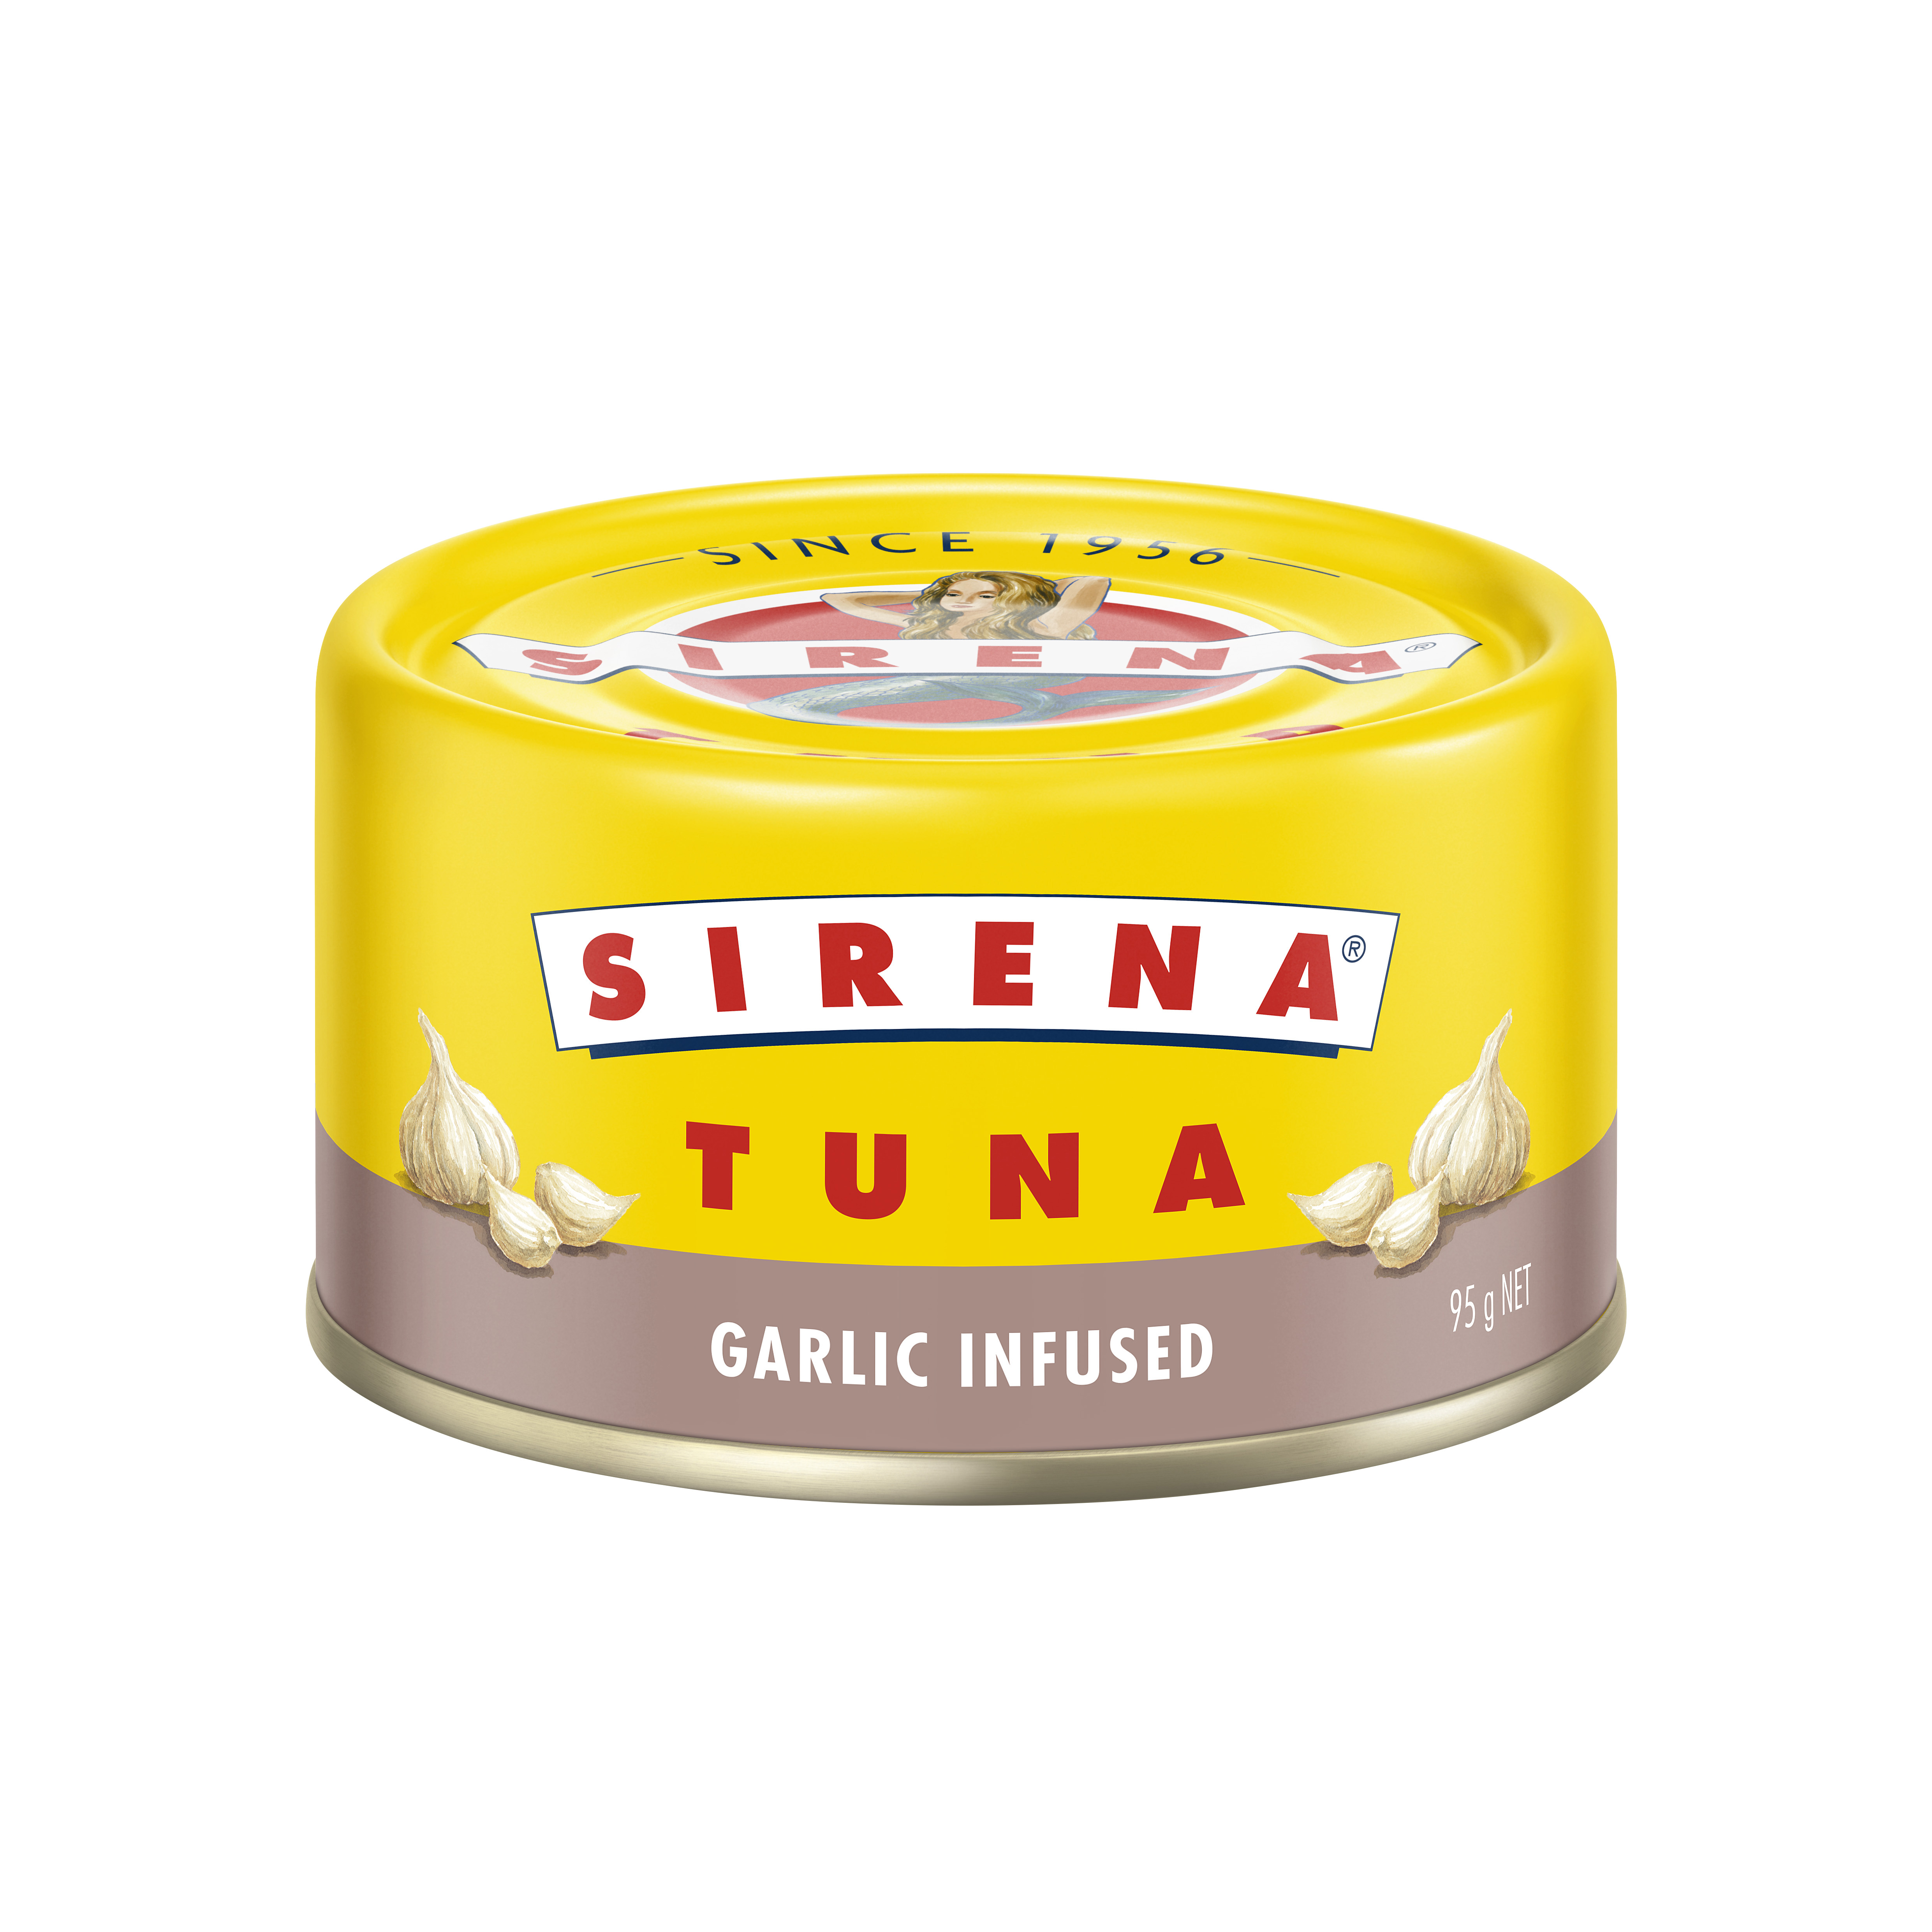 Sirena Tuna Garlic Infused can image